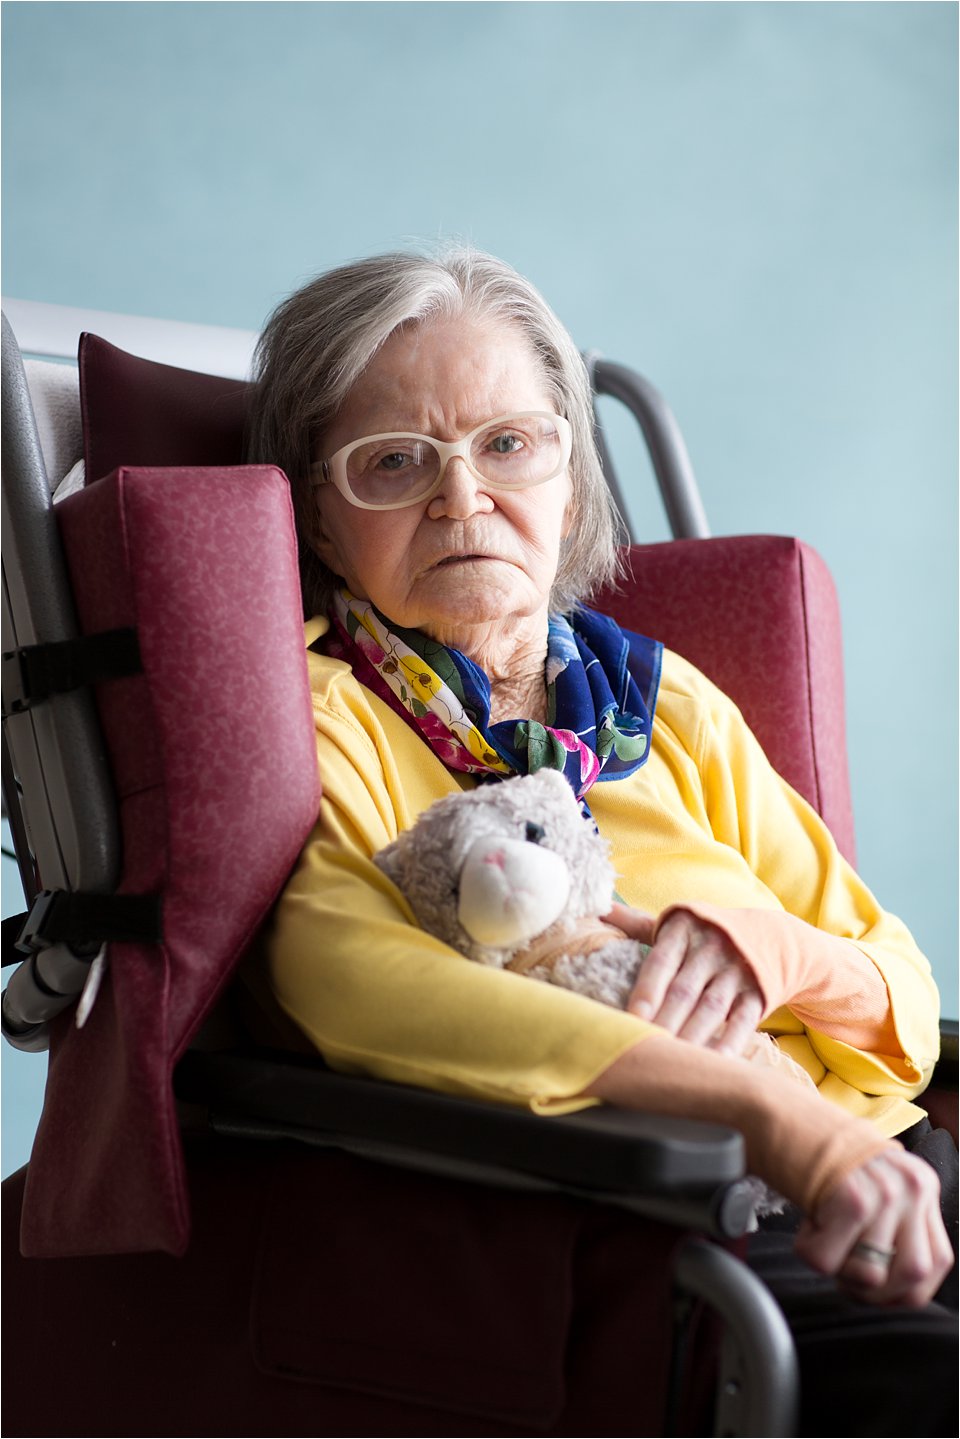 Elderly woman with stuffed animal (C) Maundy Mitchell